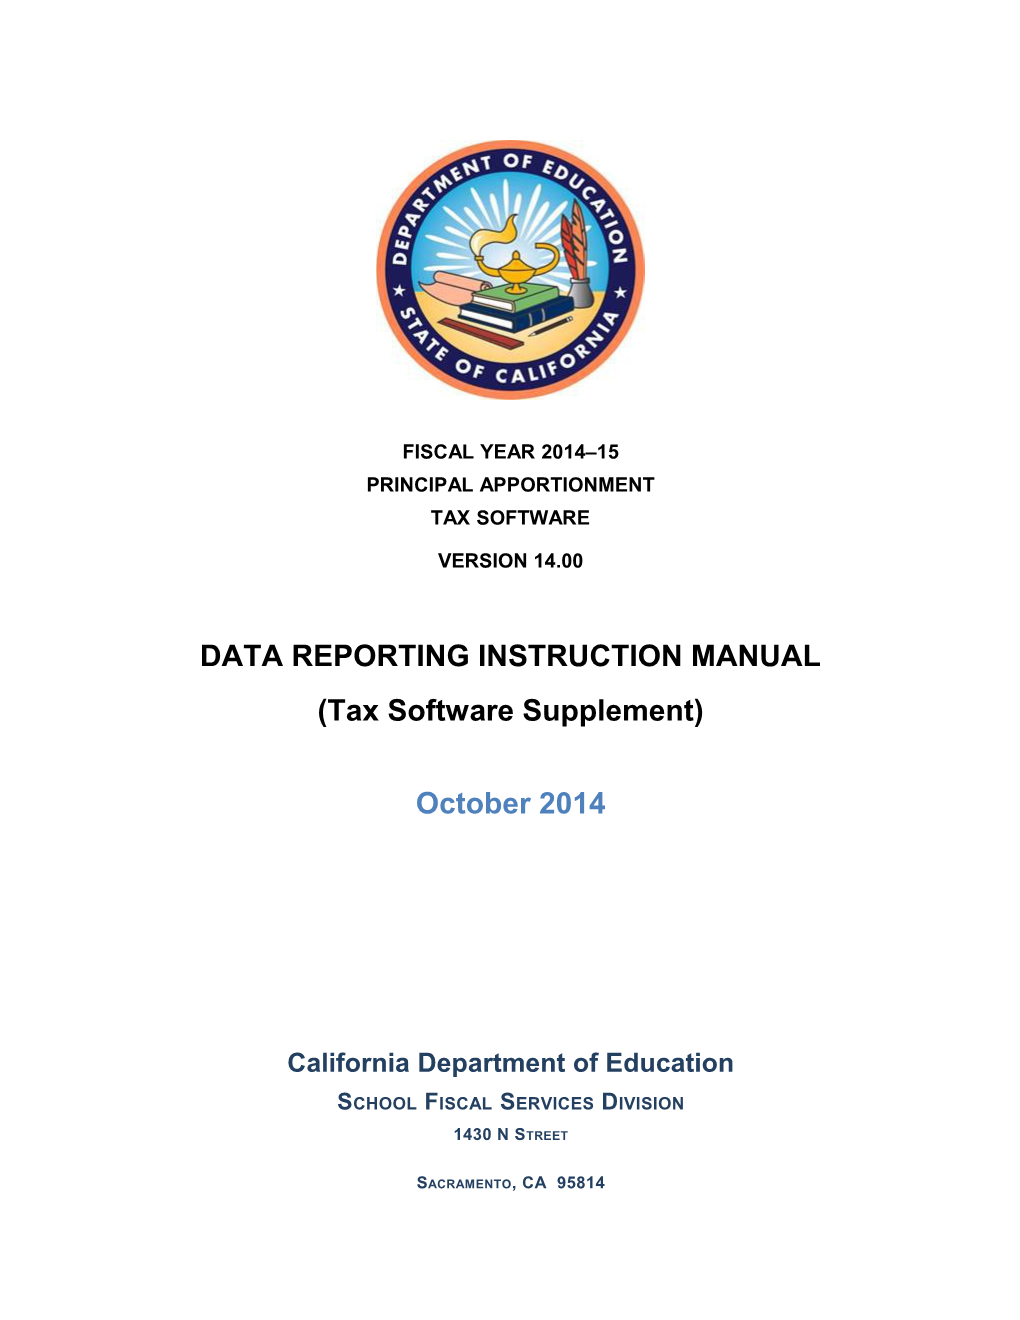 Tax Software DRIM, FY 2014-15 - Principal Apportionment (CA Dept of Education)